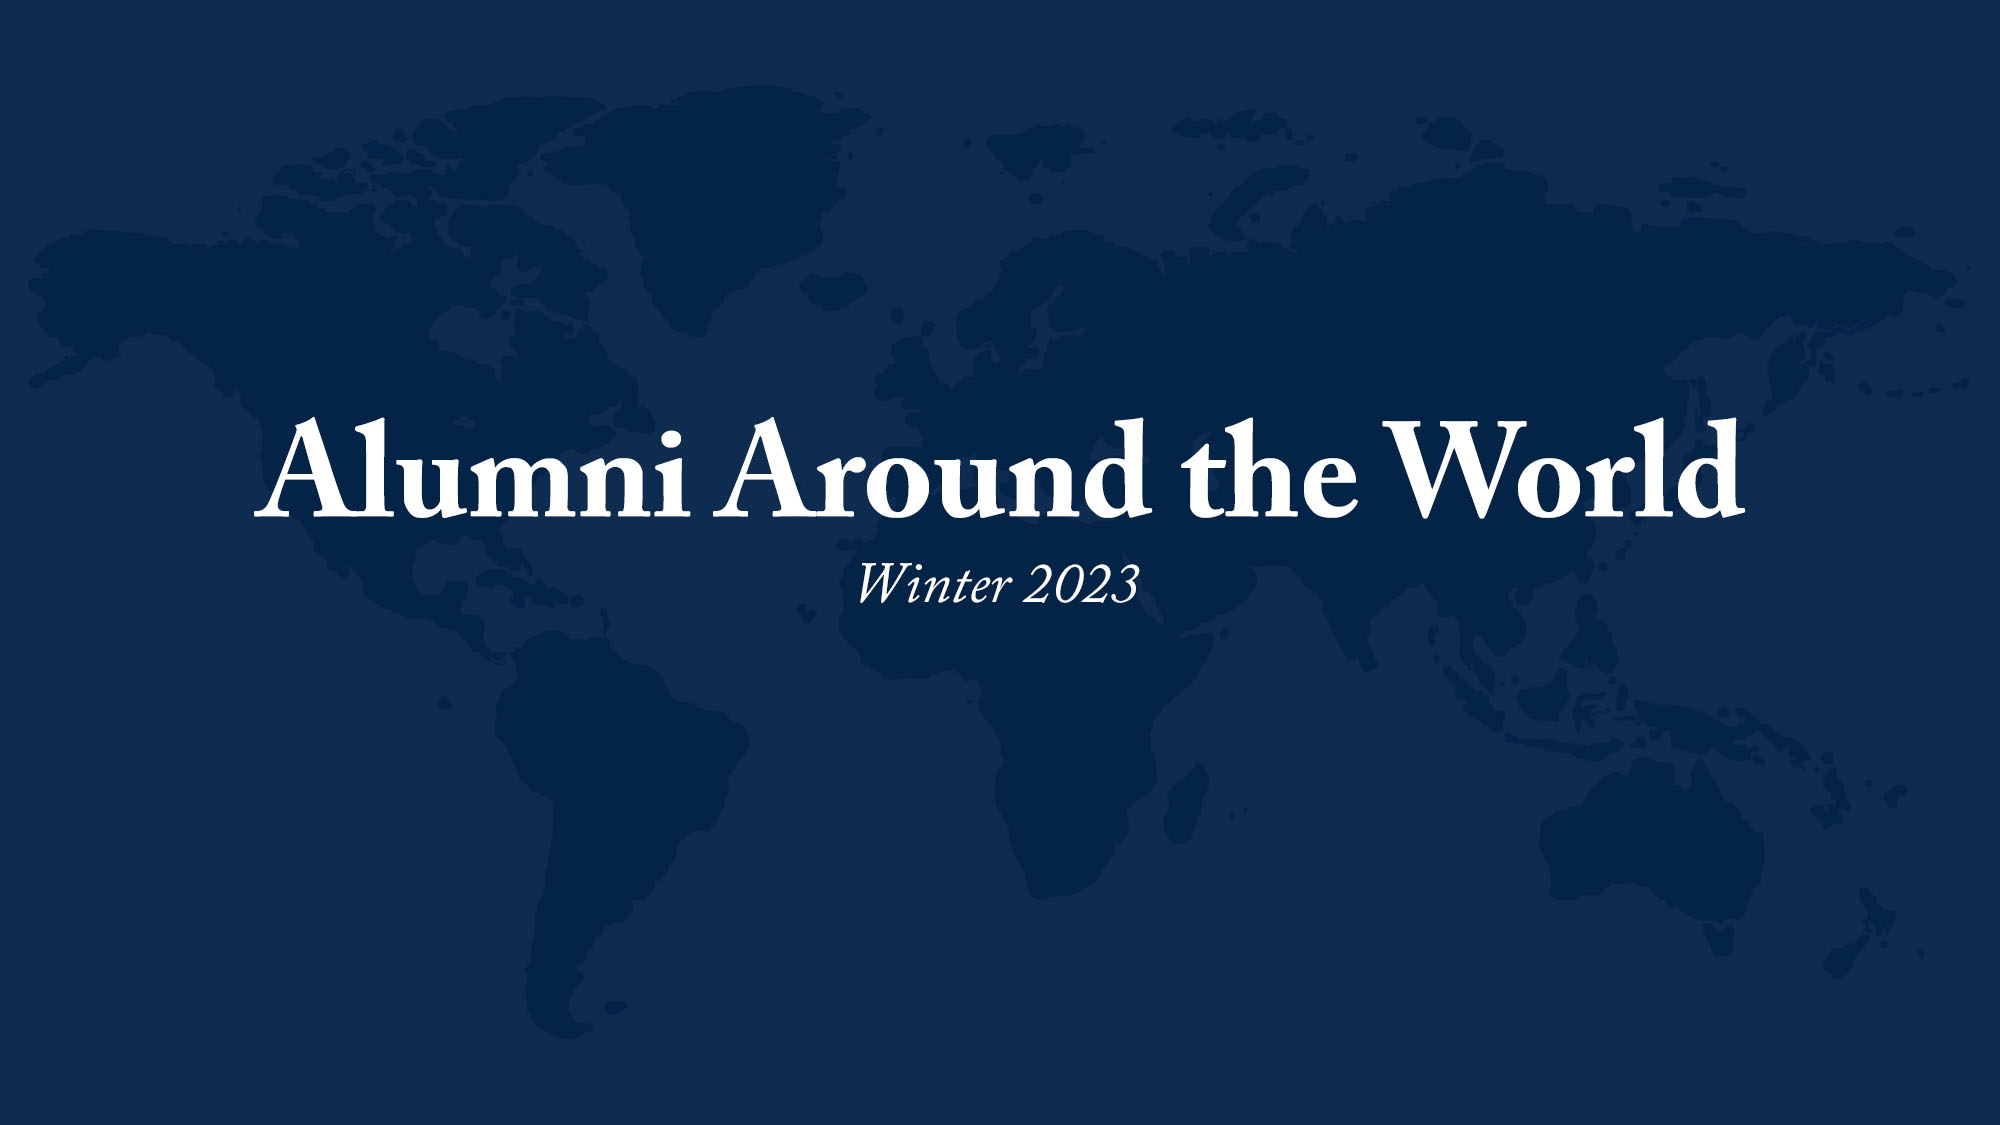 Alumni Around the World in Winter 2023